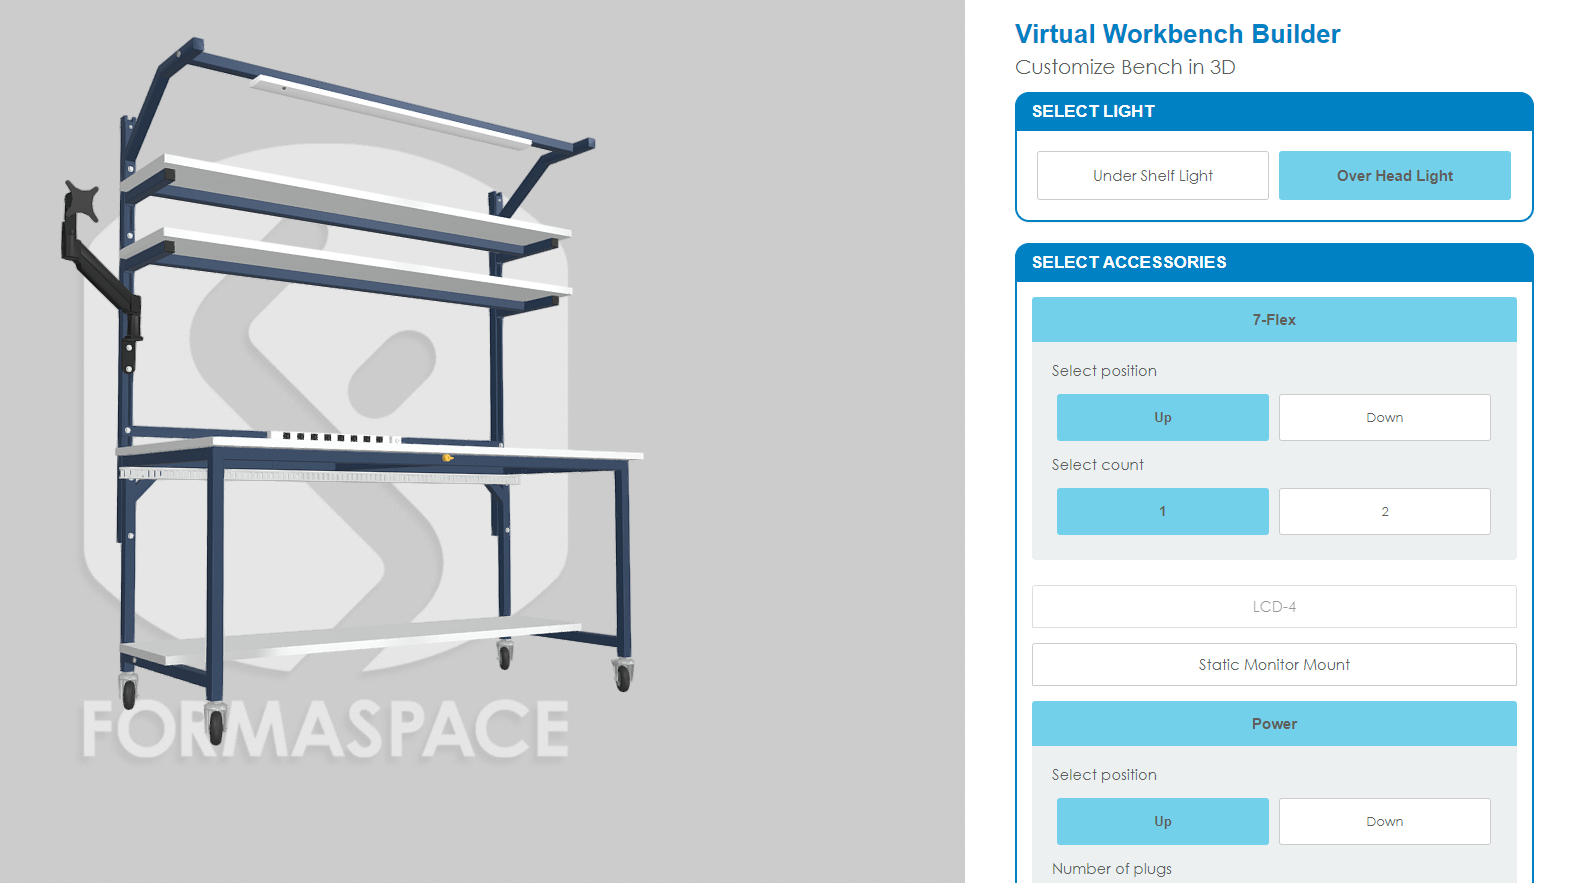 Figure 3: Formaspace's 3DConfigure Virtual Workbench Builder